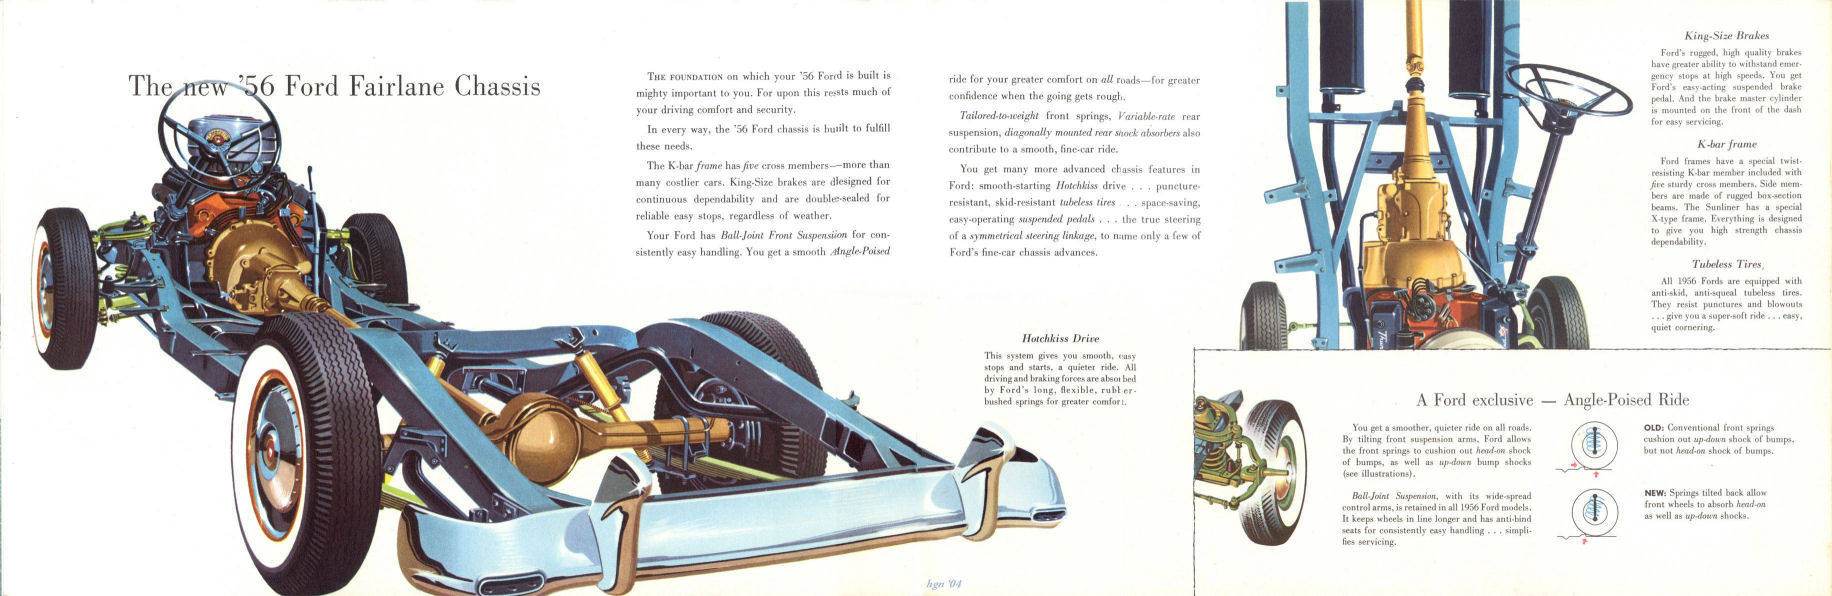 1956 Ford Fairlane-08